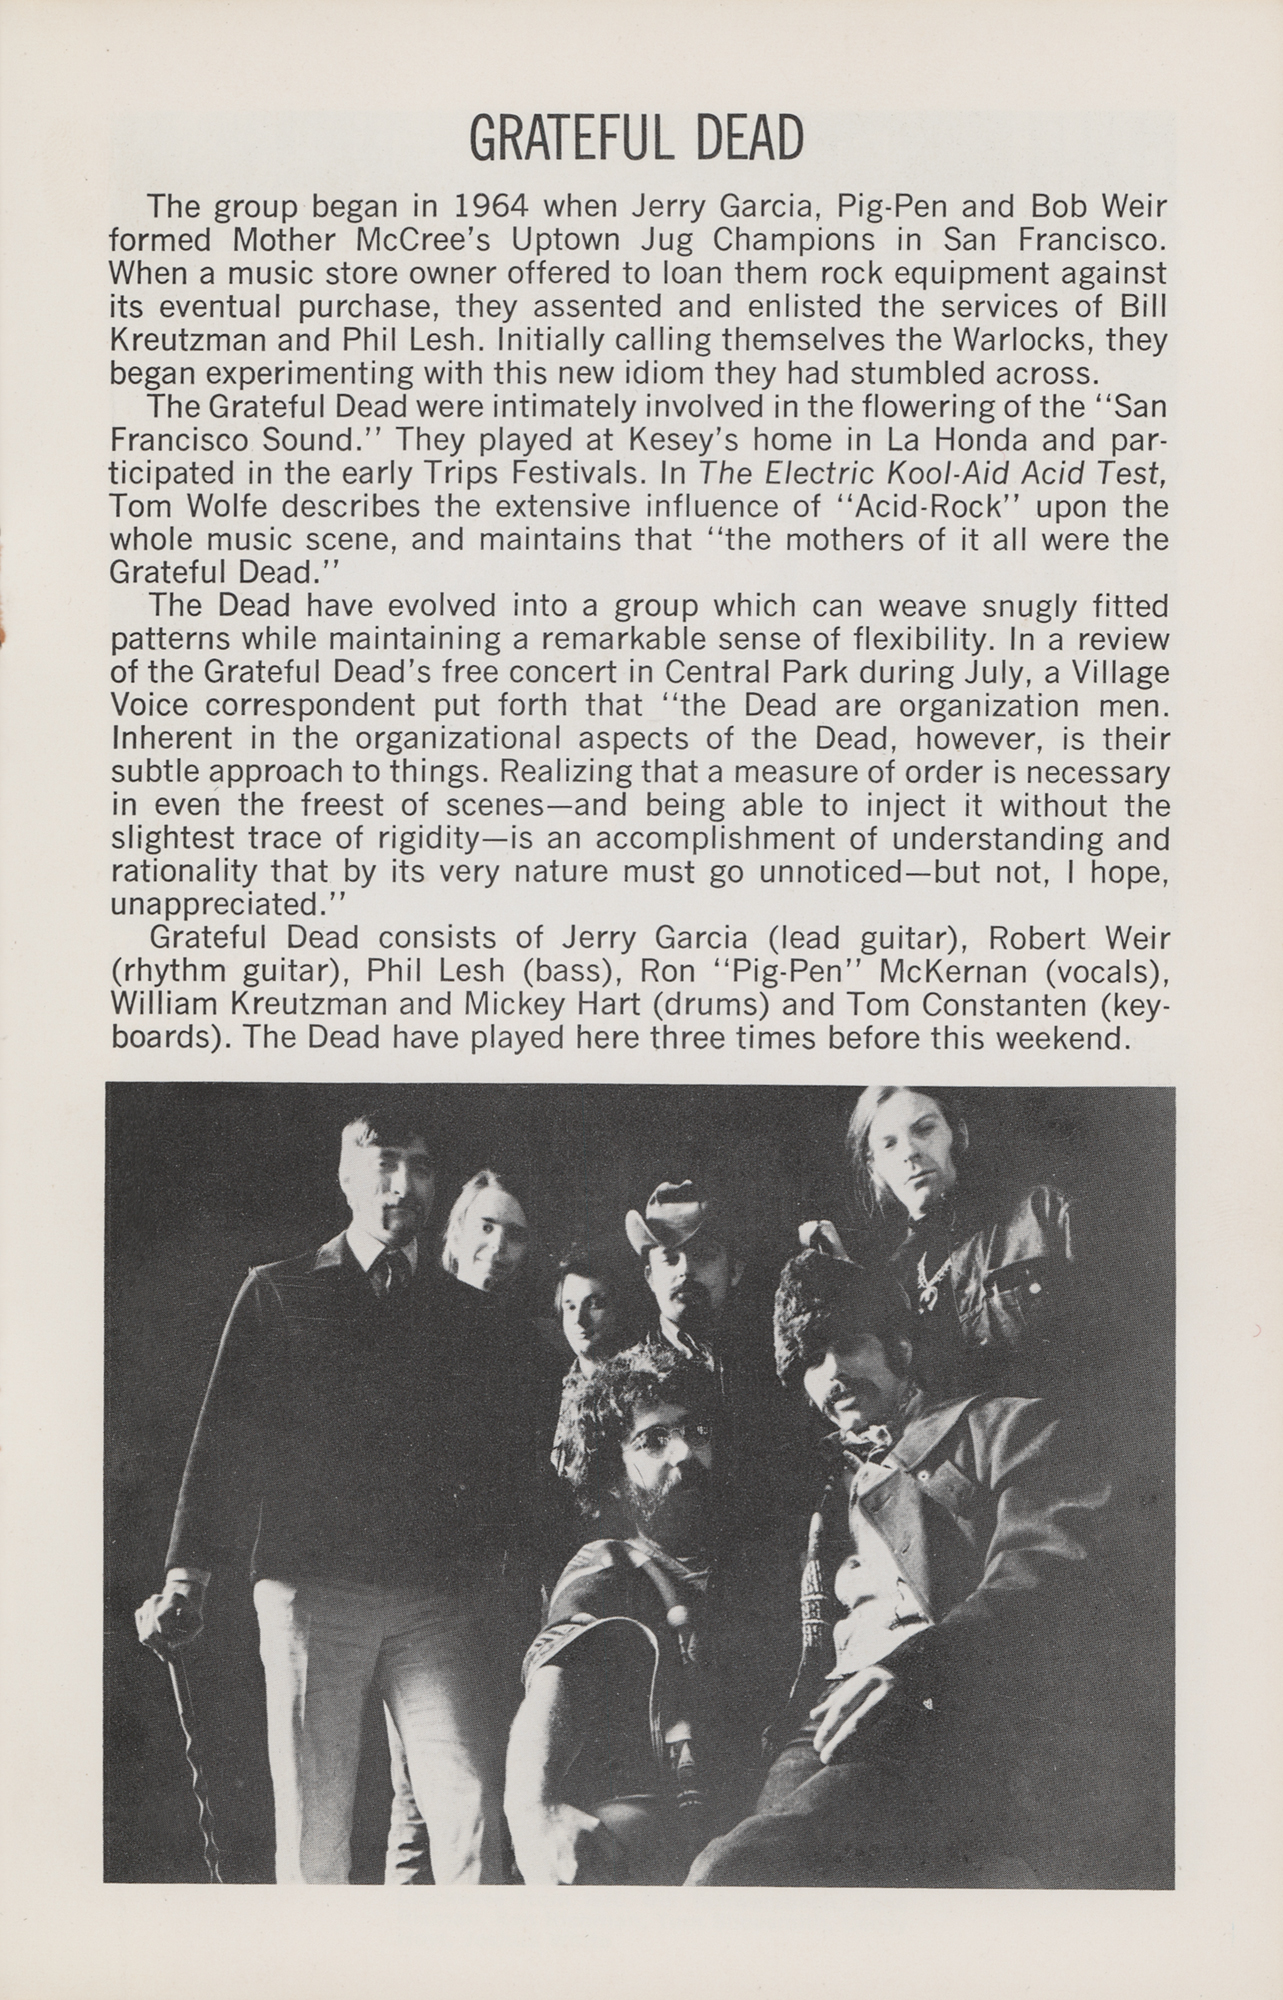 Lot #5137 Grateful Dead 1969 Fillmore East Program